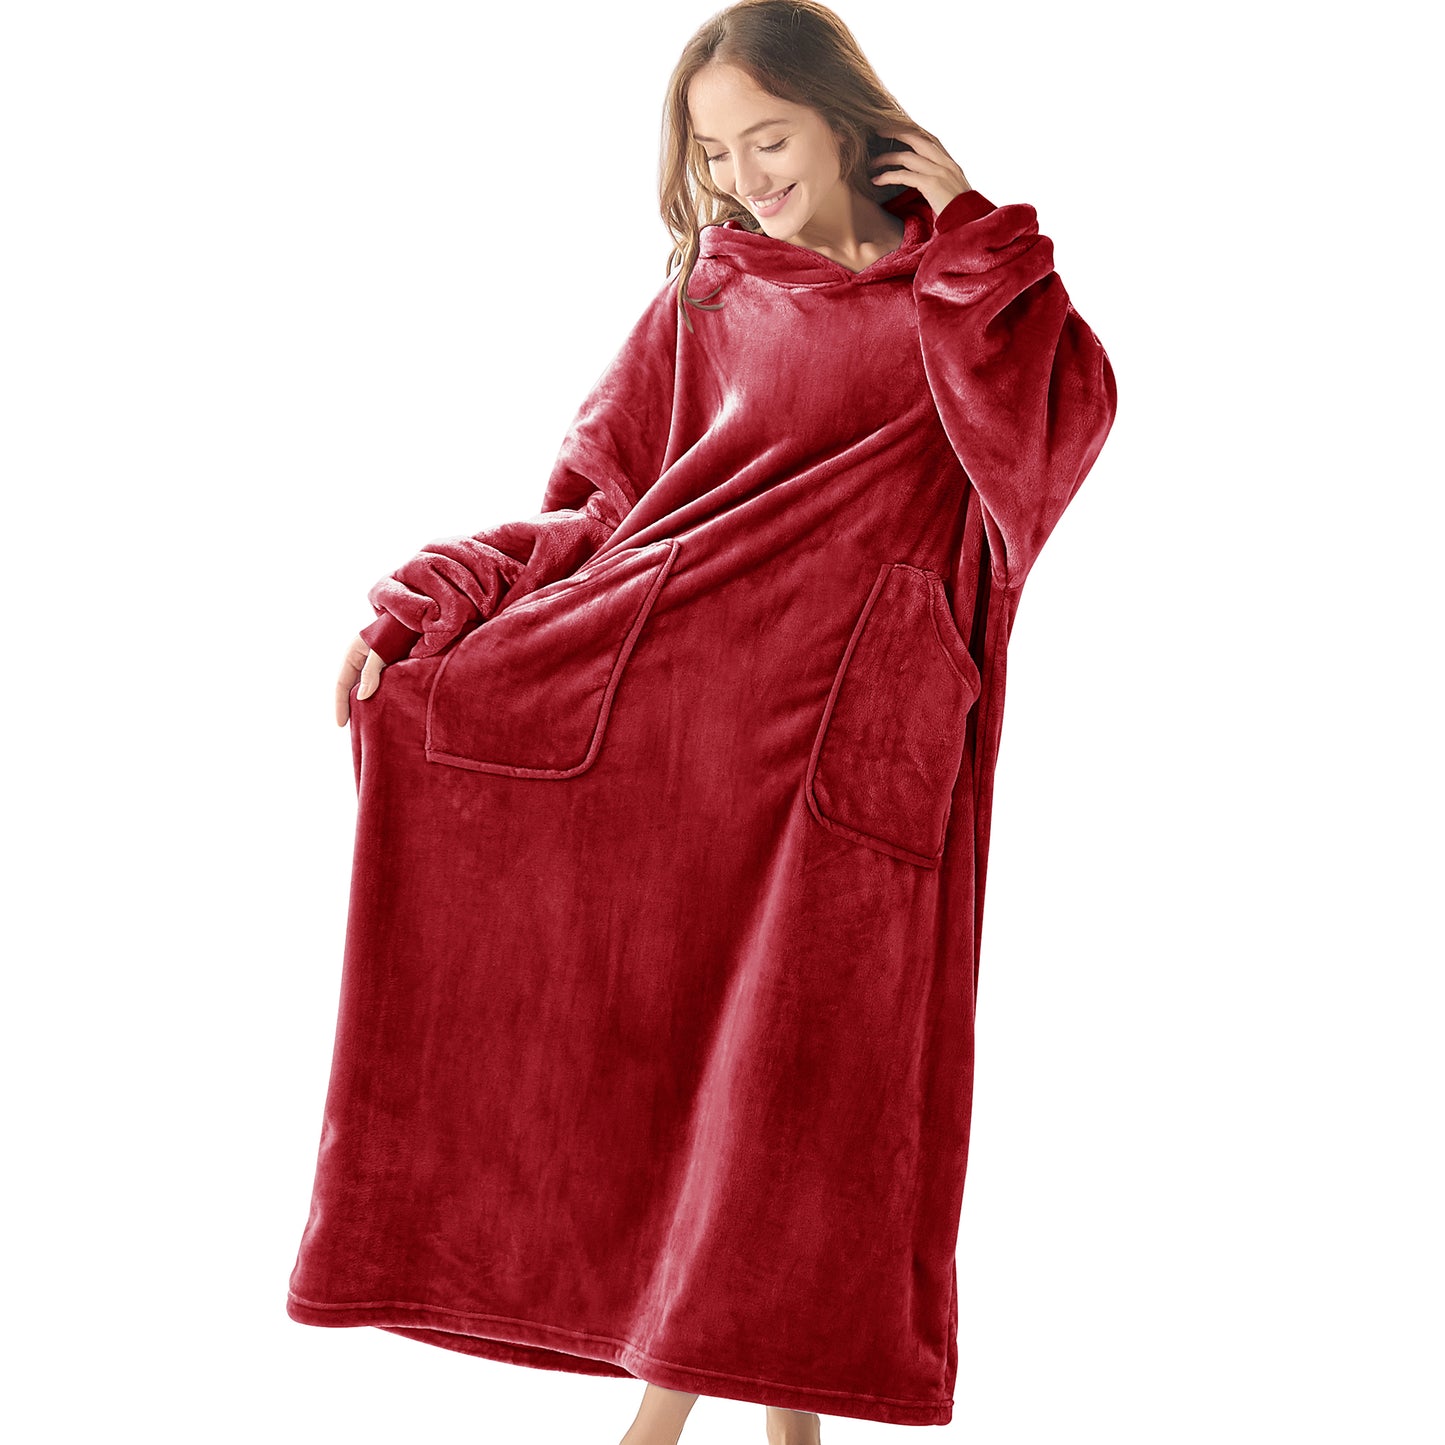 Wearable Blanket Hoodie, Oversized Long Fleece Hooded Blanket Adult, Cozy Warm Sweatshirt Blanket for Women Men Teen